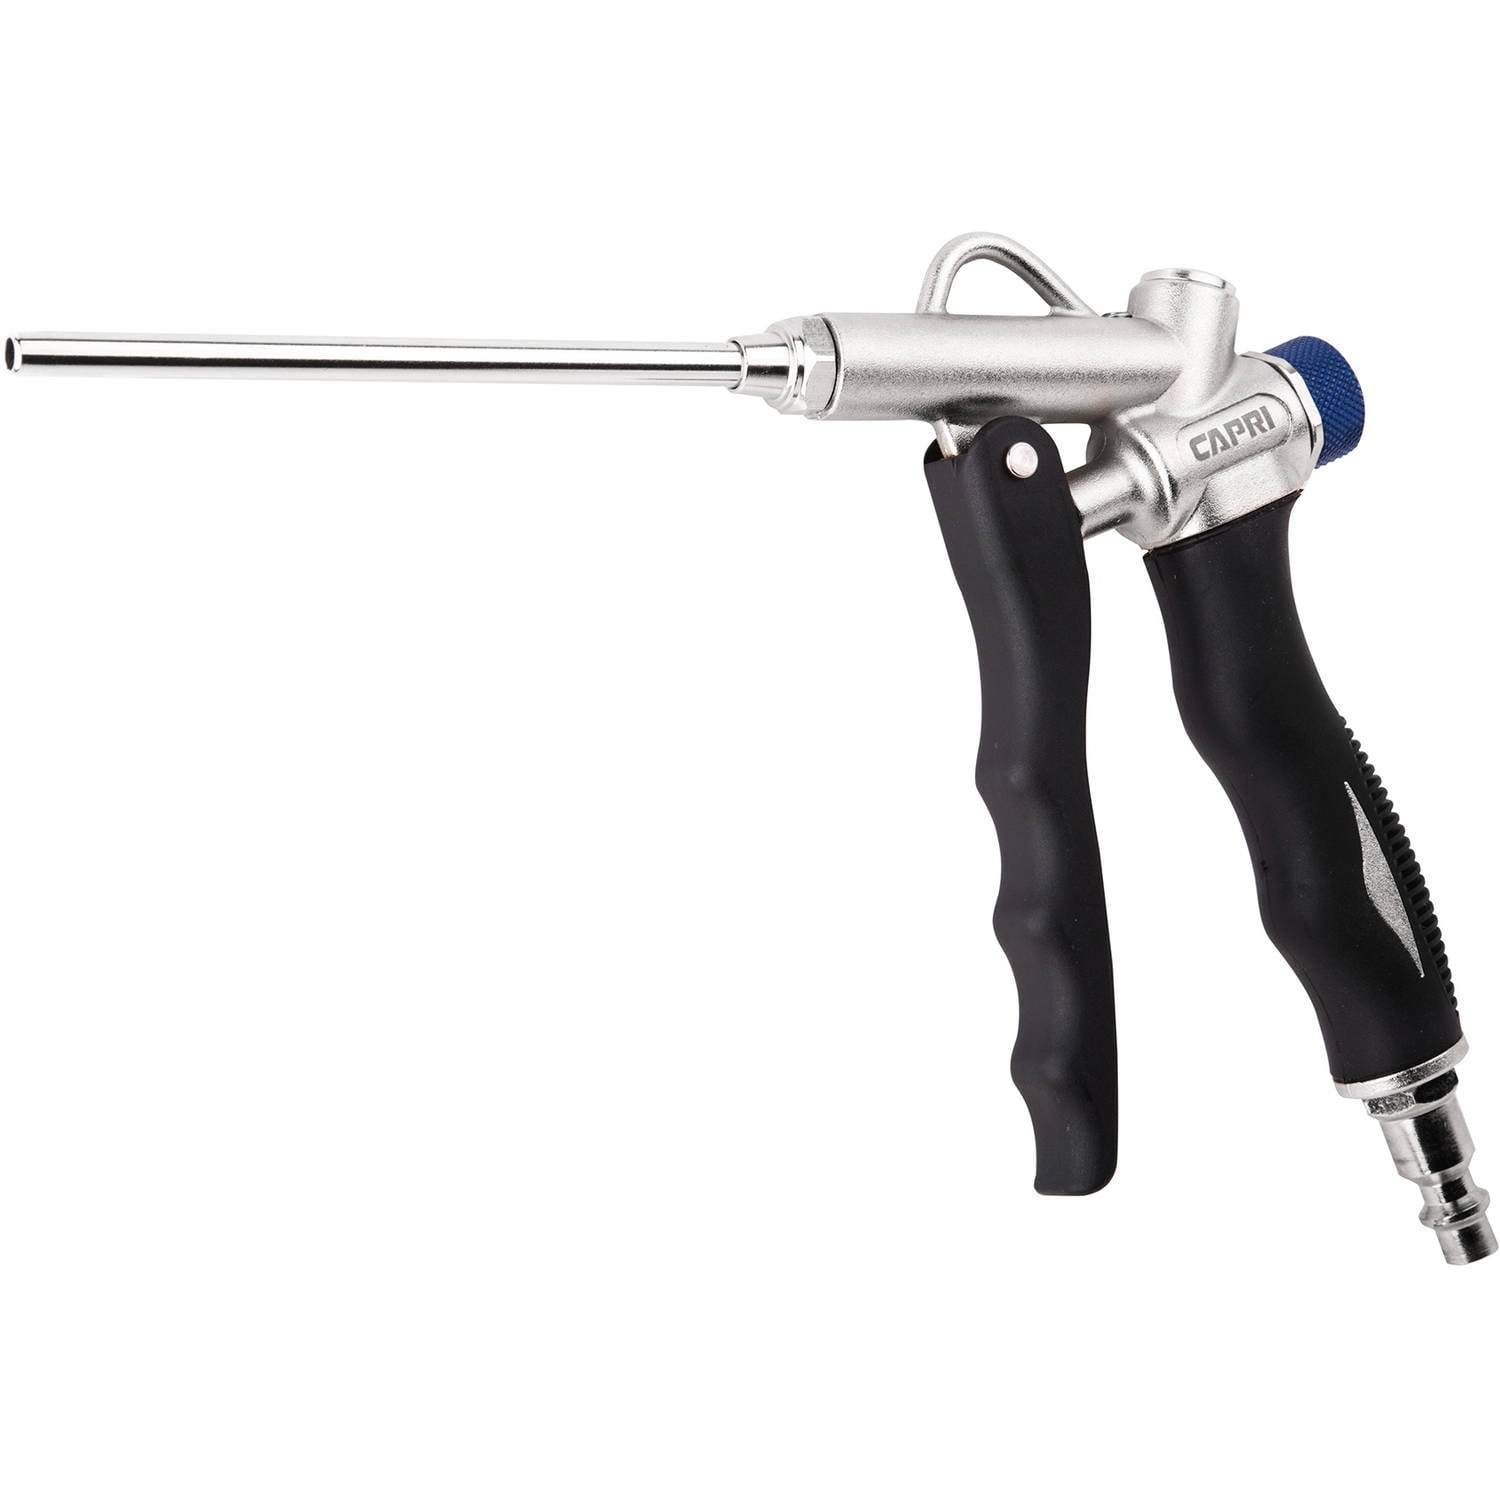 Air Blow Gun 2 Way Adjustable Air Flow High Flow Nozzle Max Work Pressure 140psi 